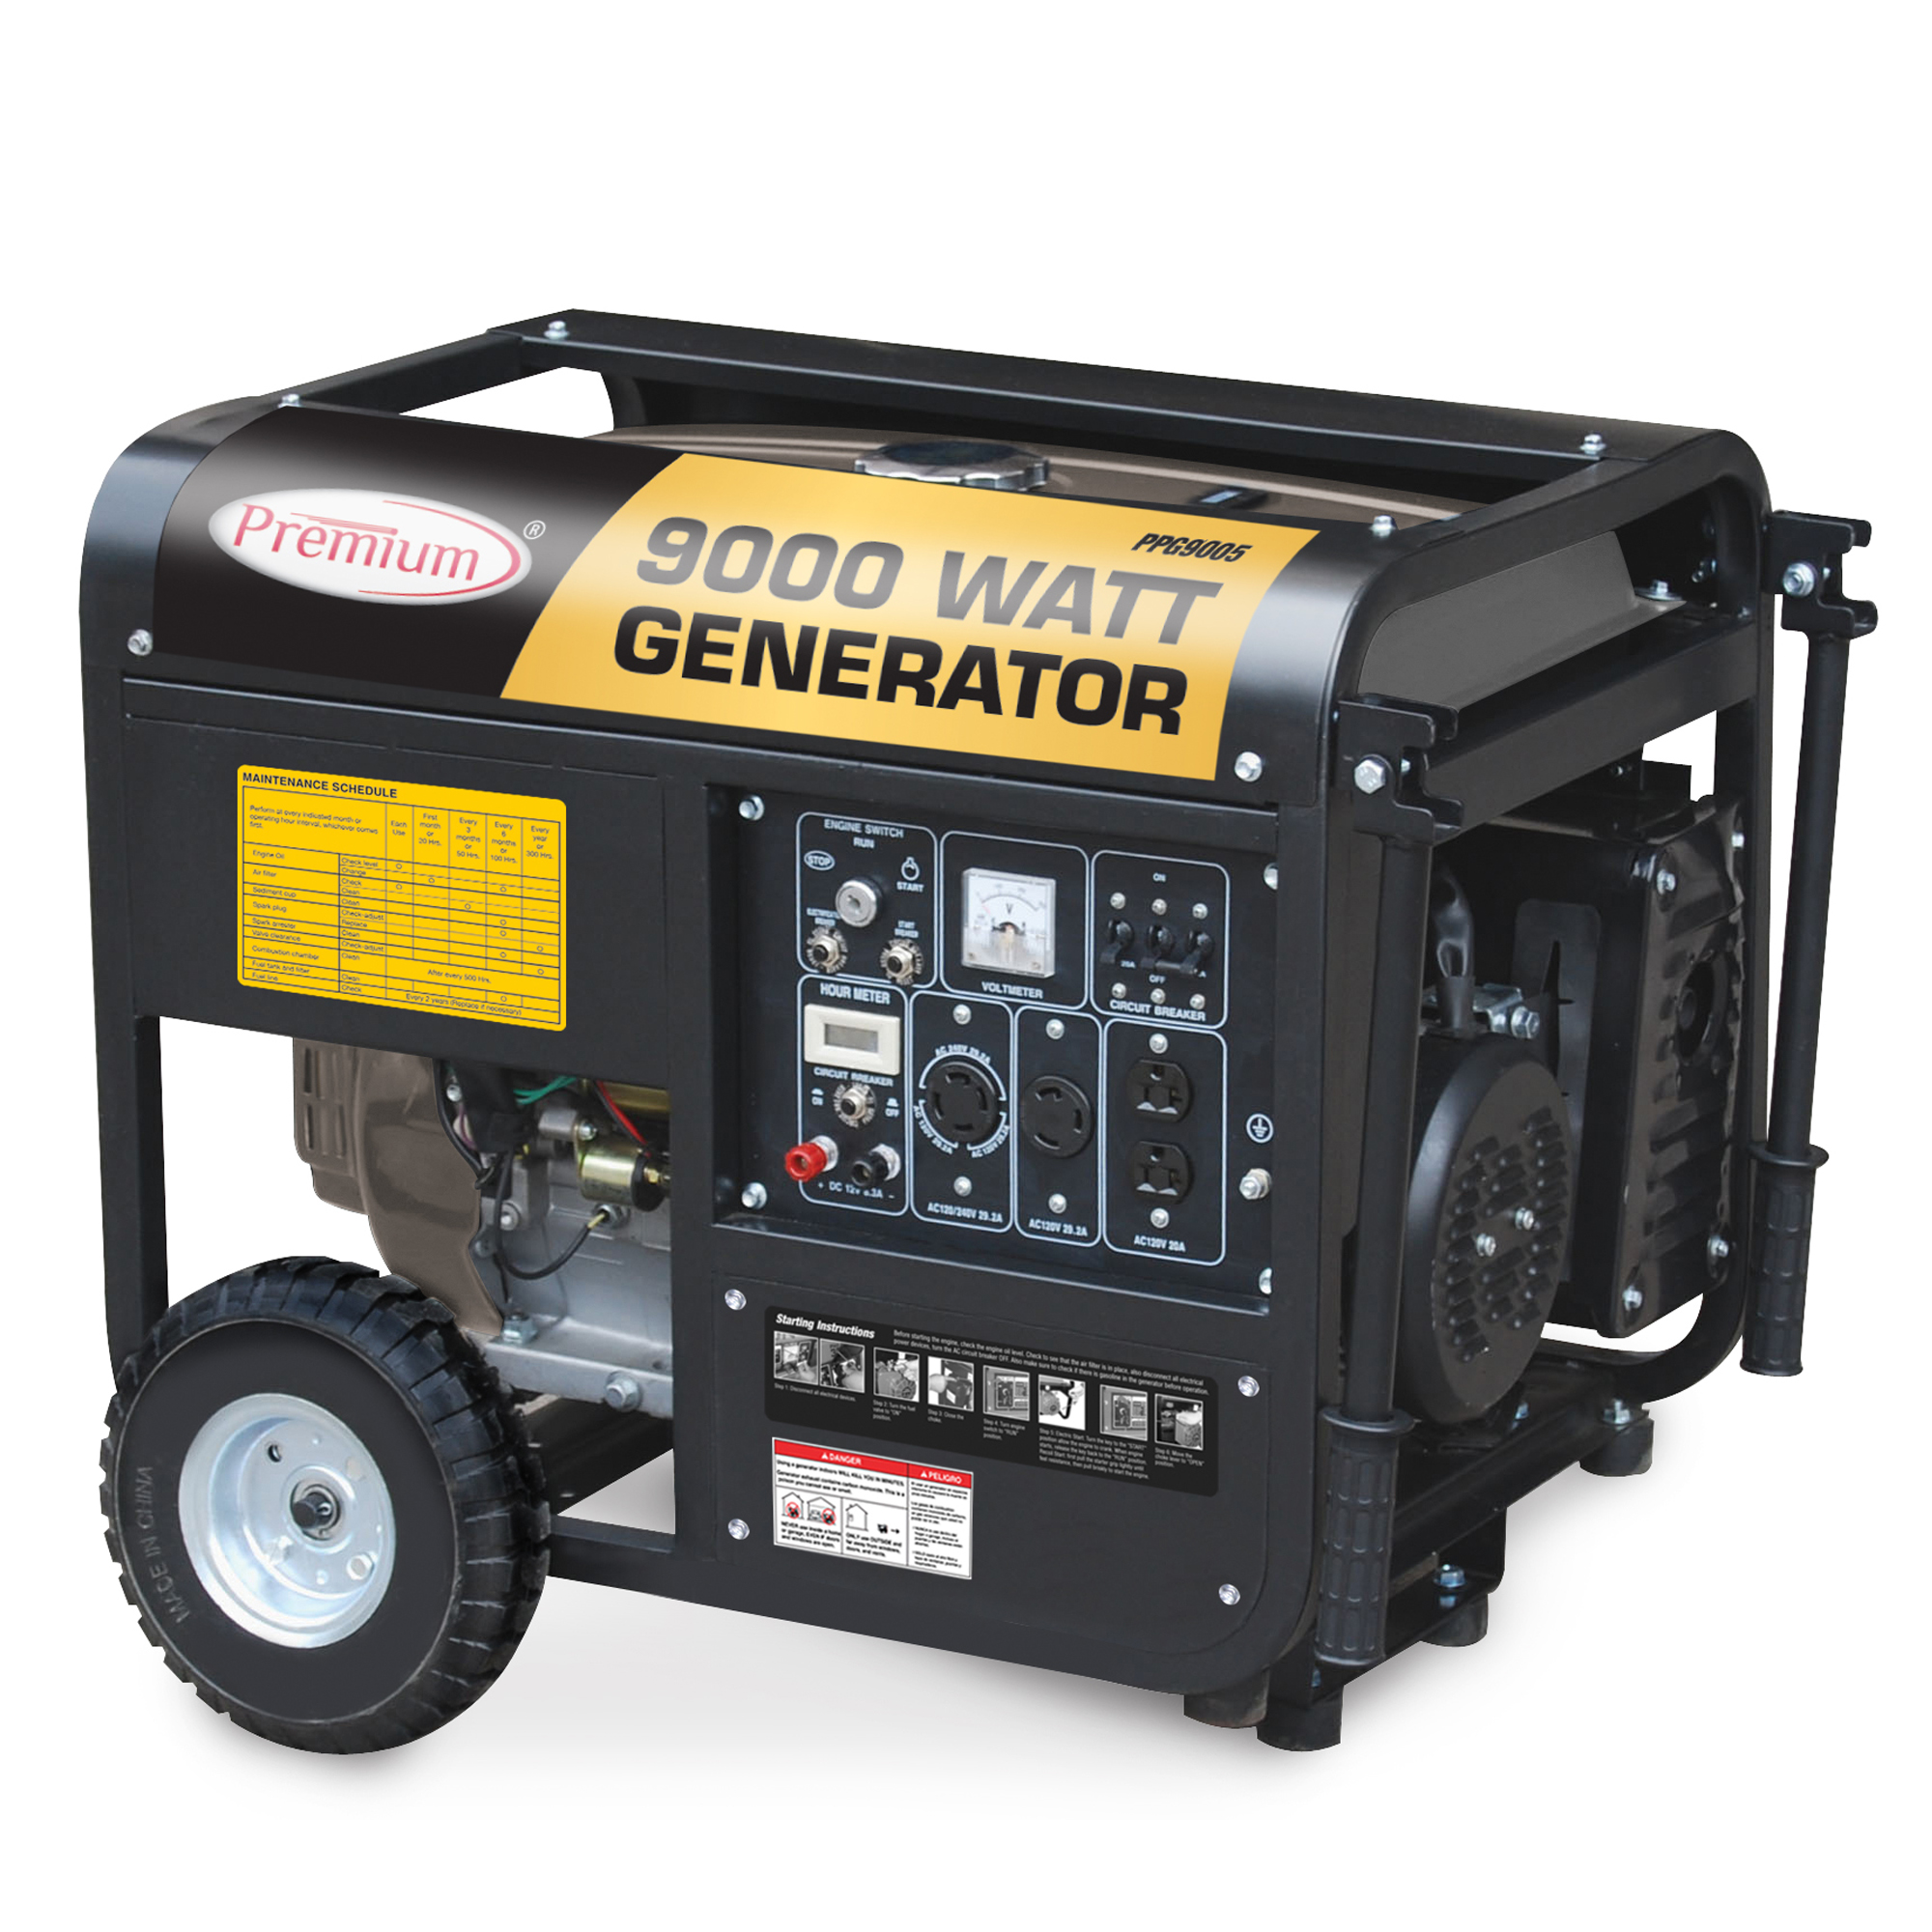 Генератор пауэр. Лог 6000 Генератор премиум. Binshi Power Генератор. Mini Power Generator. Leader swemar Generator lsw-480.